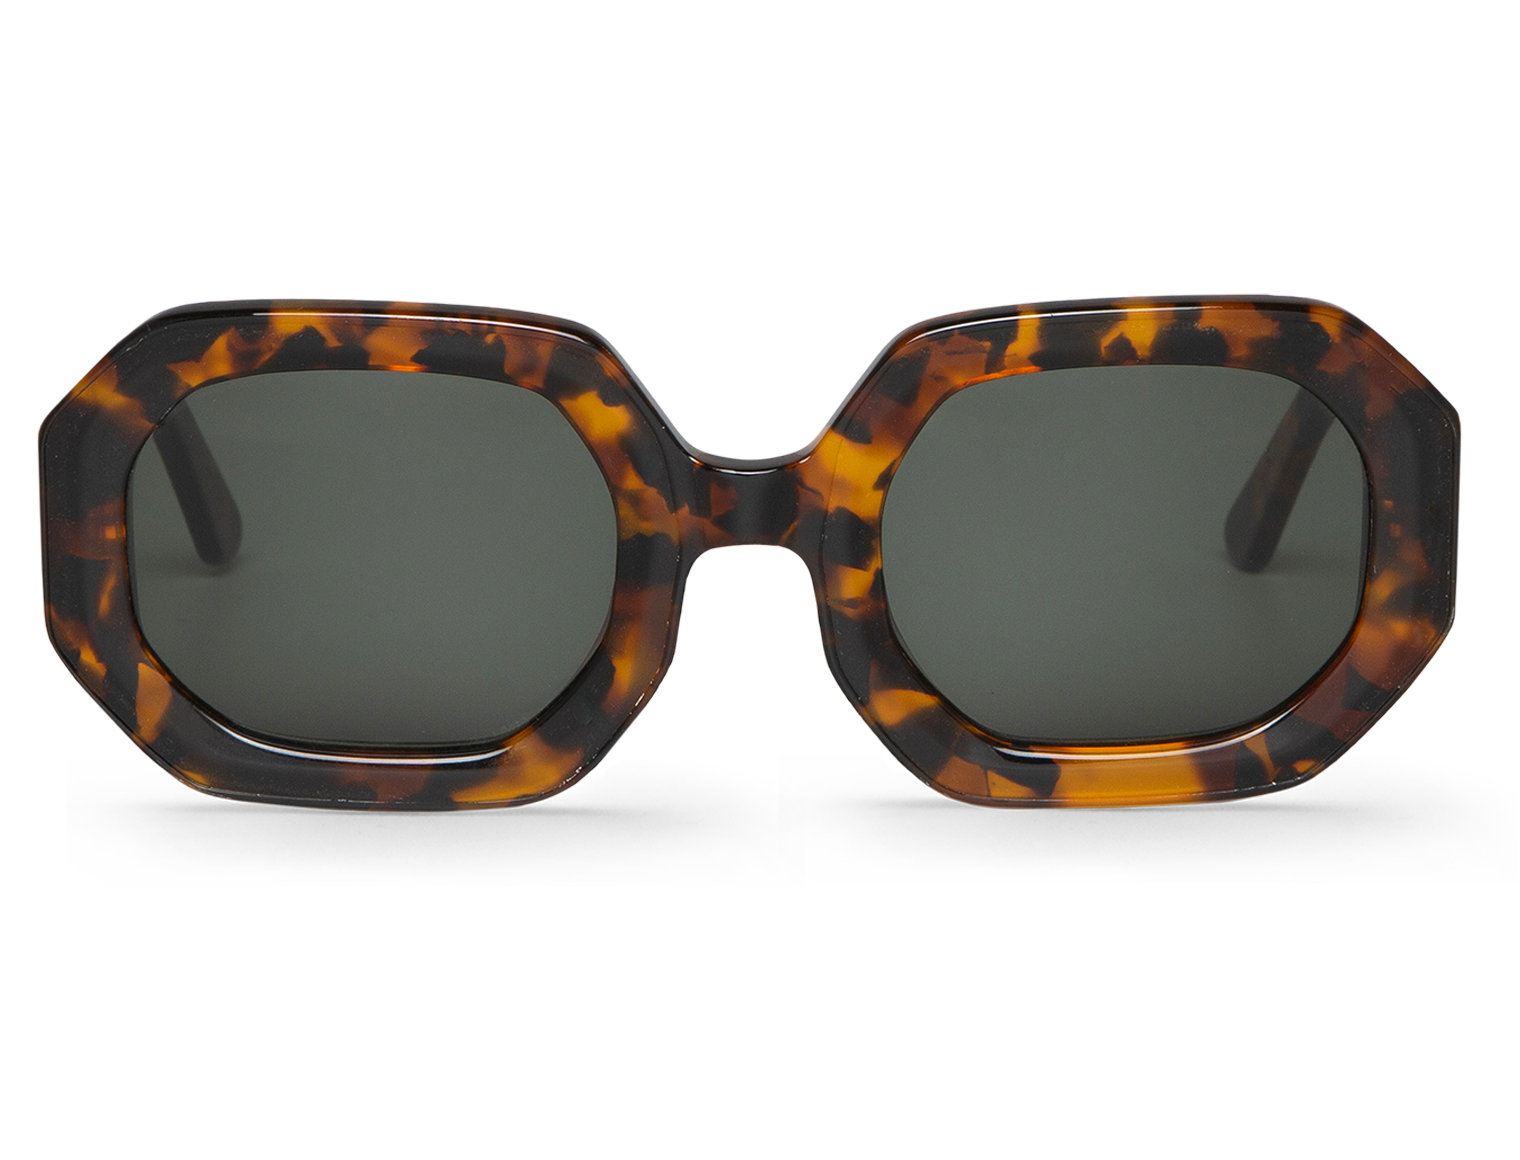 MR BOHO Cheetah Tortoise Sagene Sunglasses with Classical Lenses